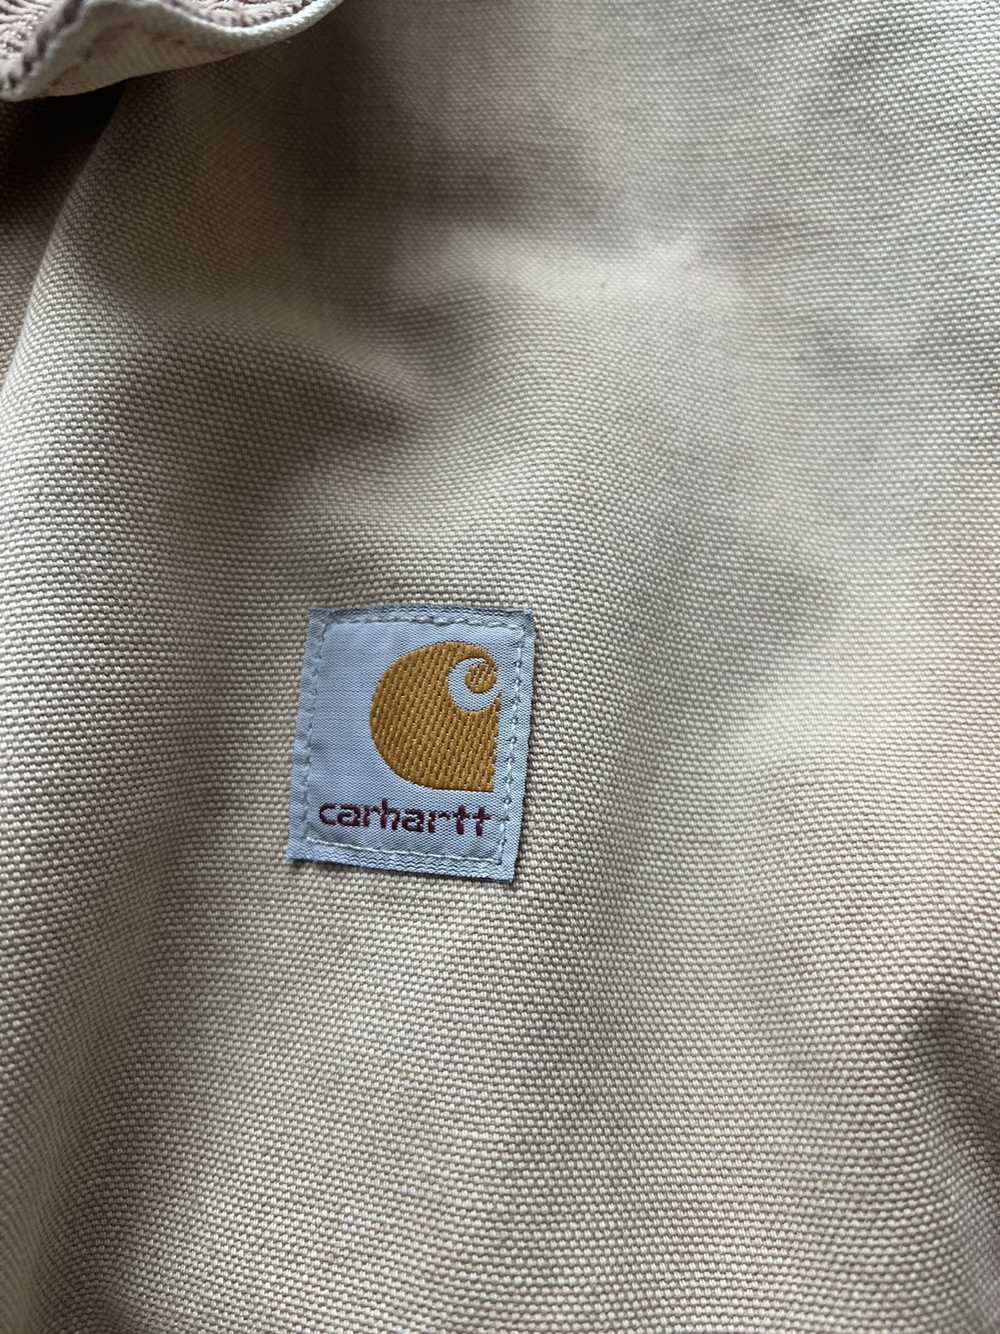 Carhartt Carhartt Detroit Jacket Vintage - image 6